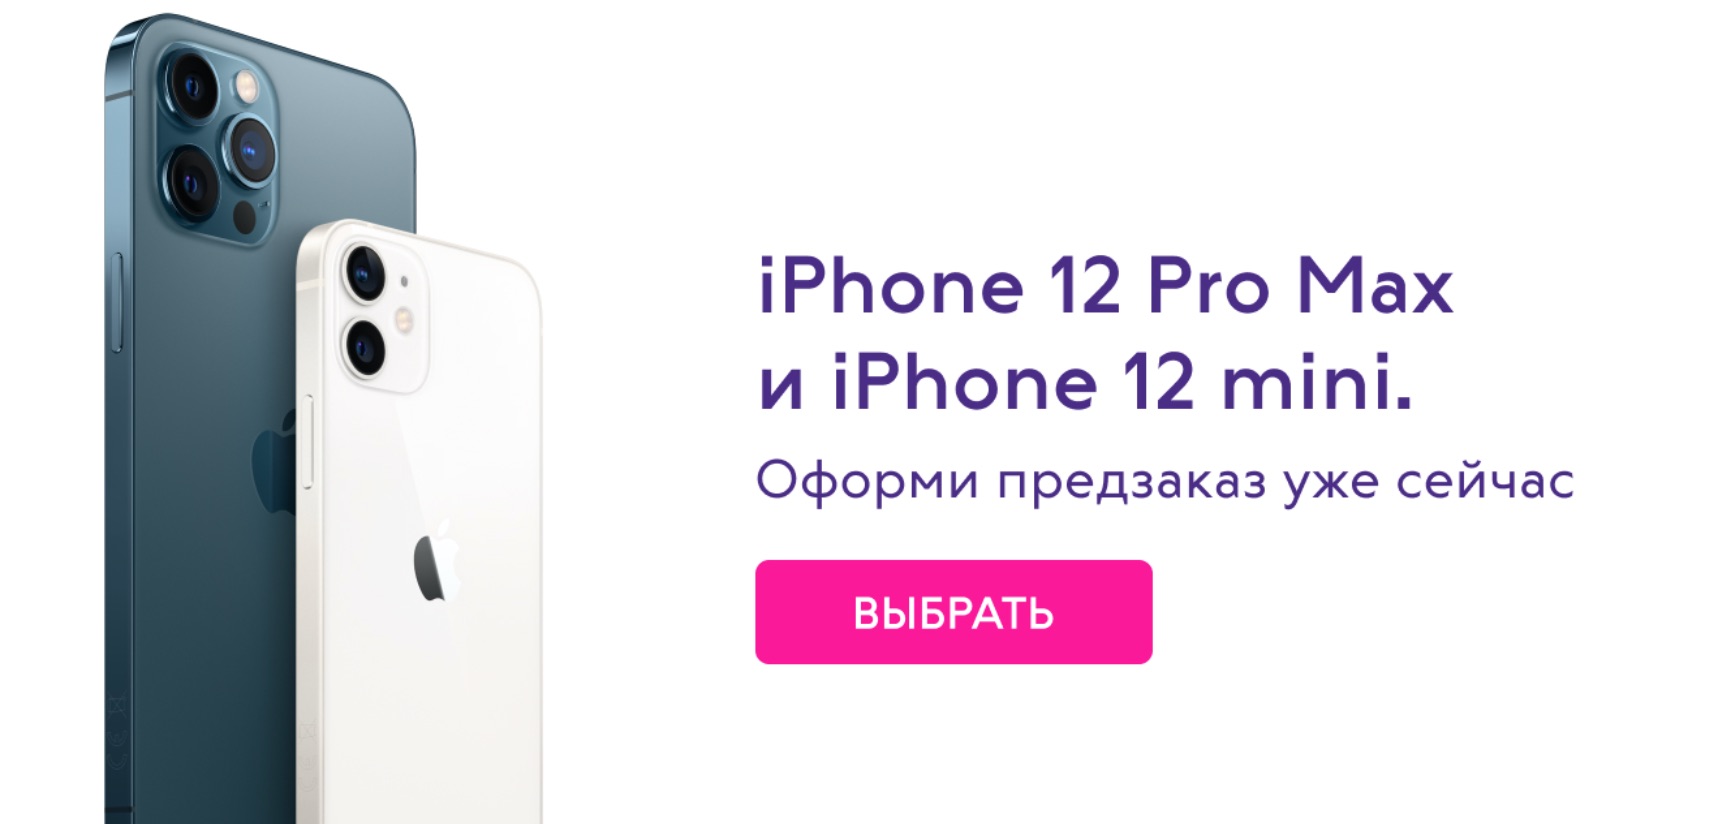 preoder iphone 12 mini:promax_связной